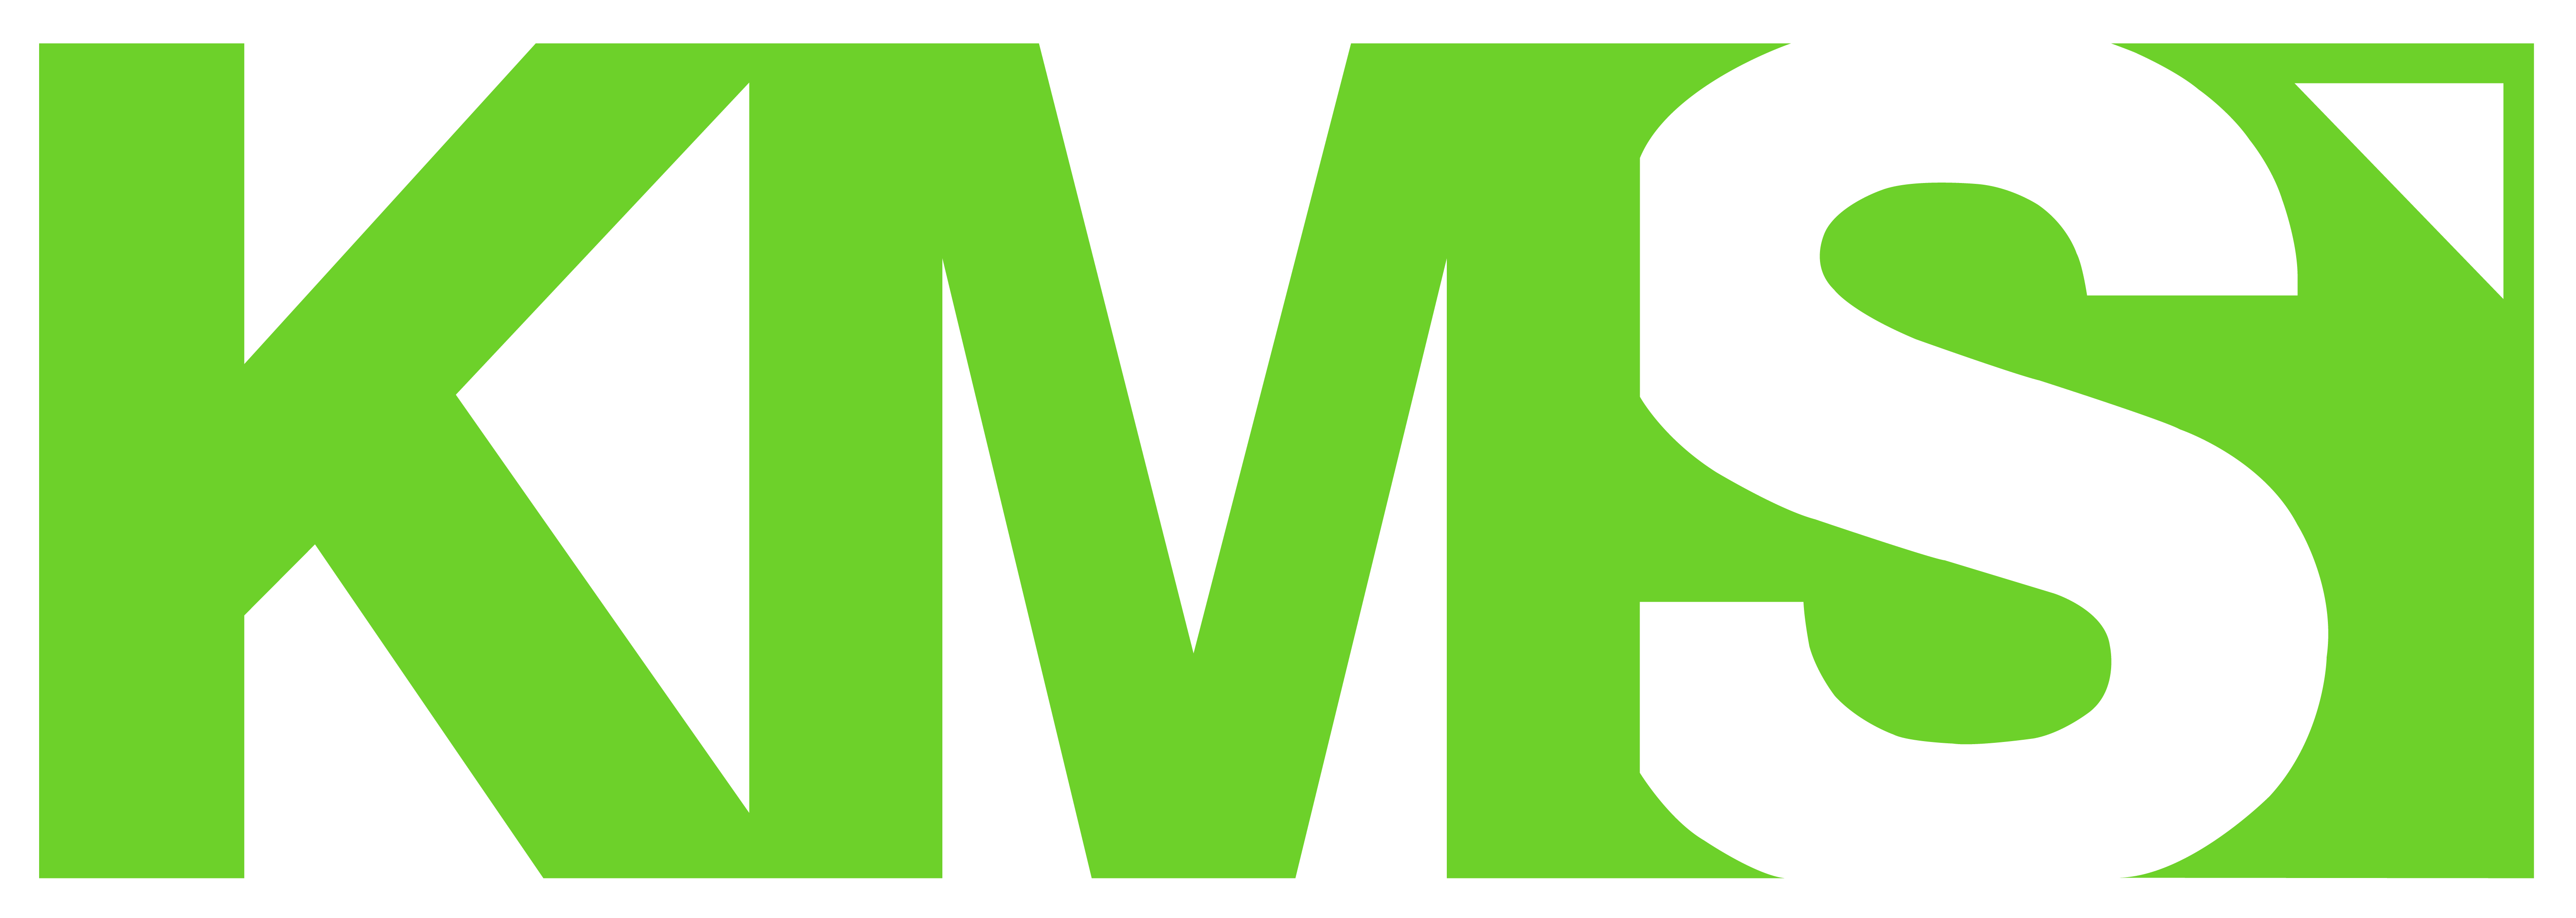 KMS_logo.png